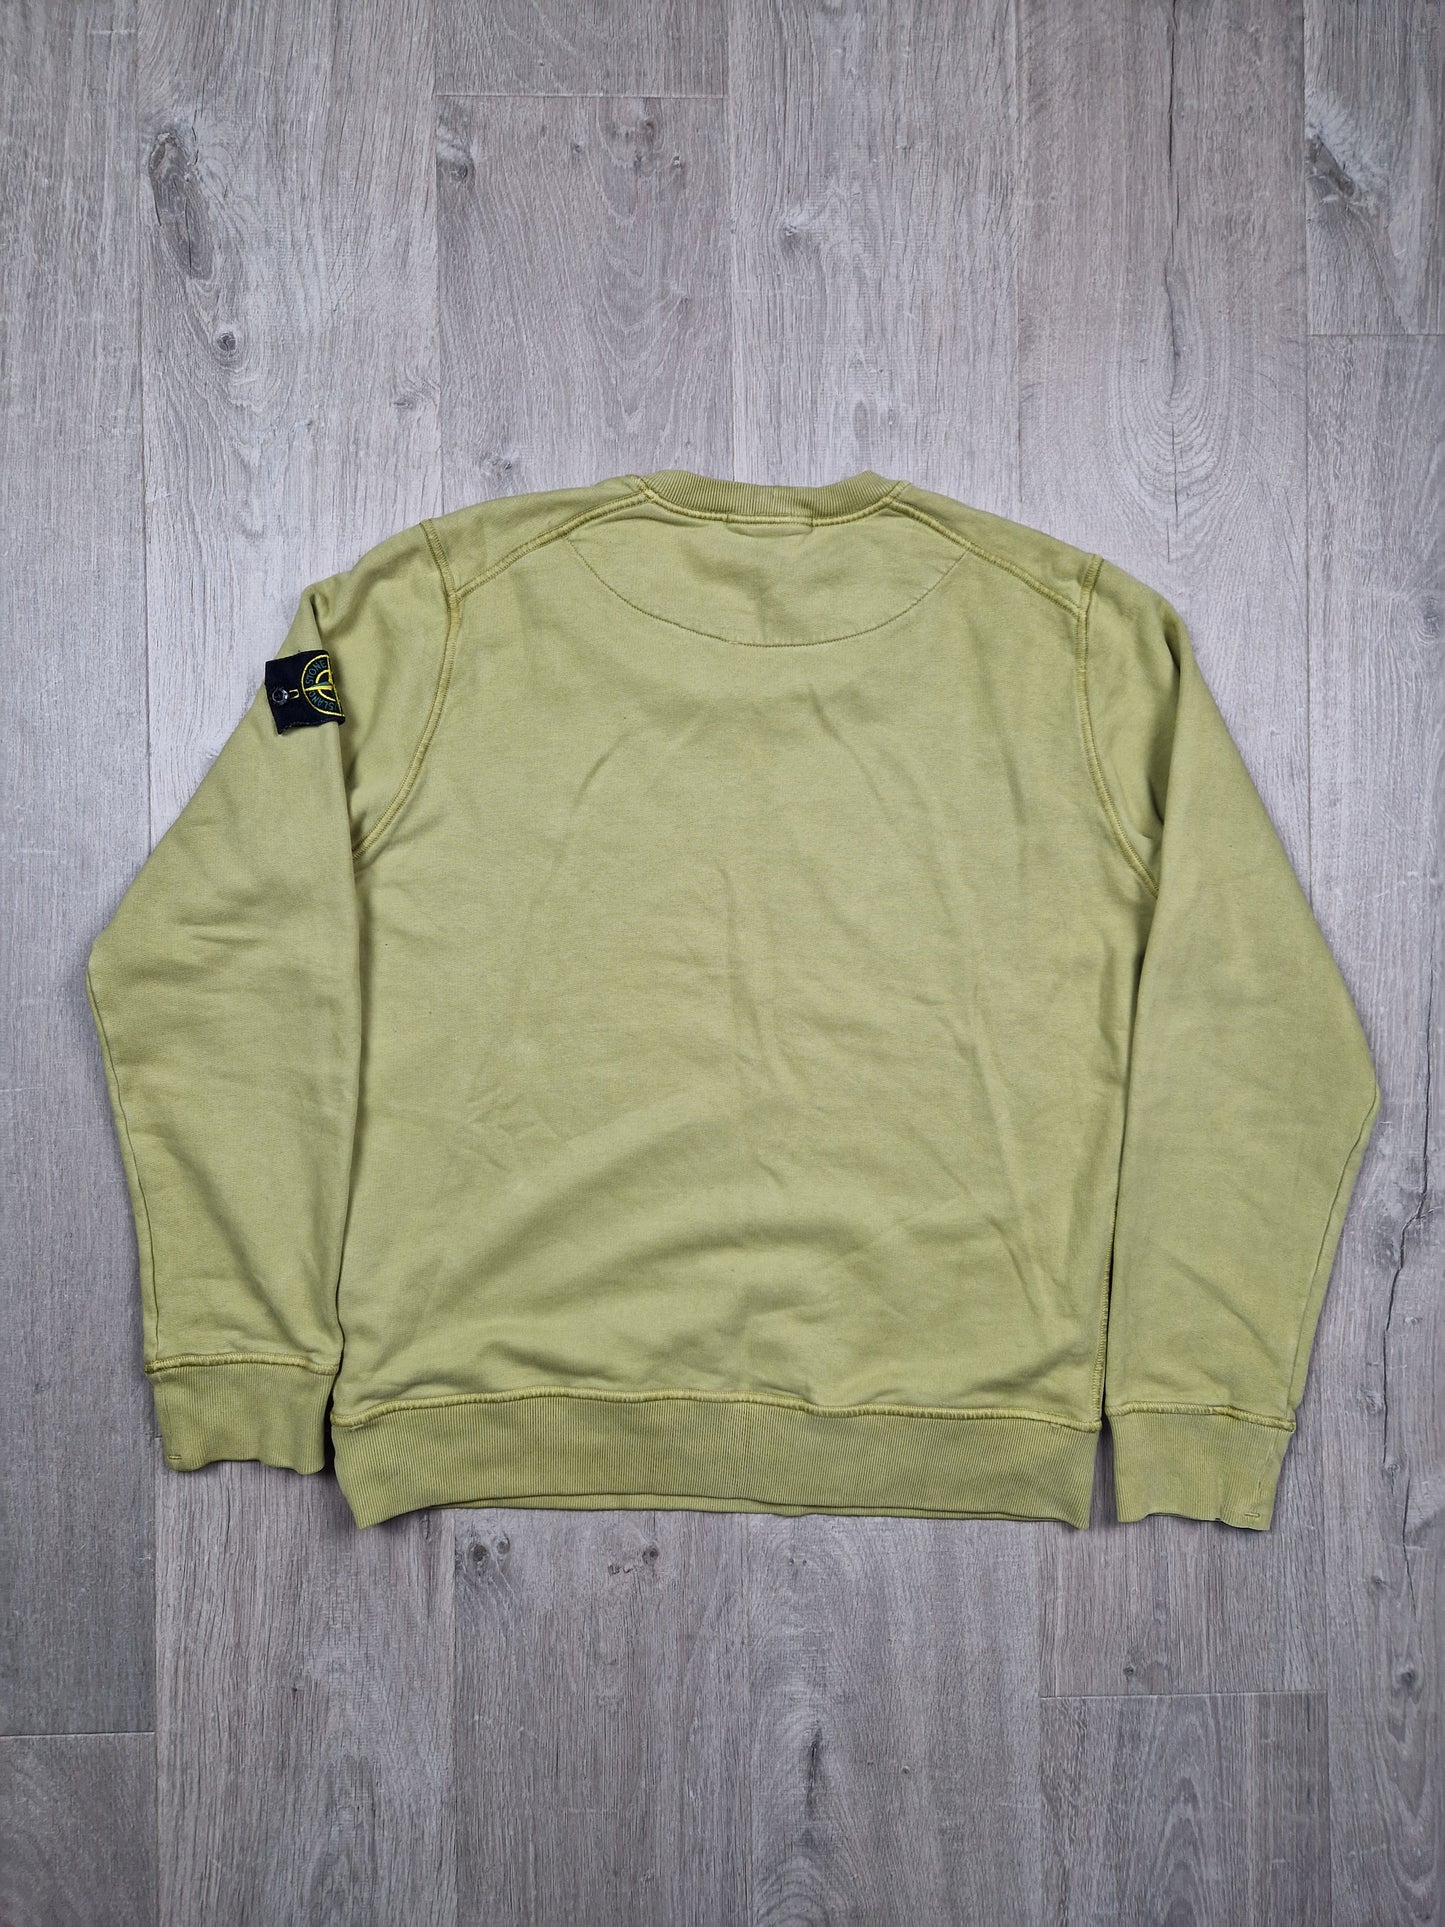 Stone Island Sweatshirt (M)